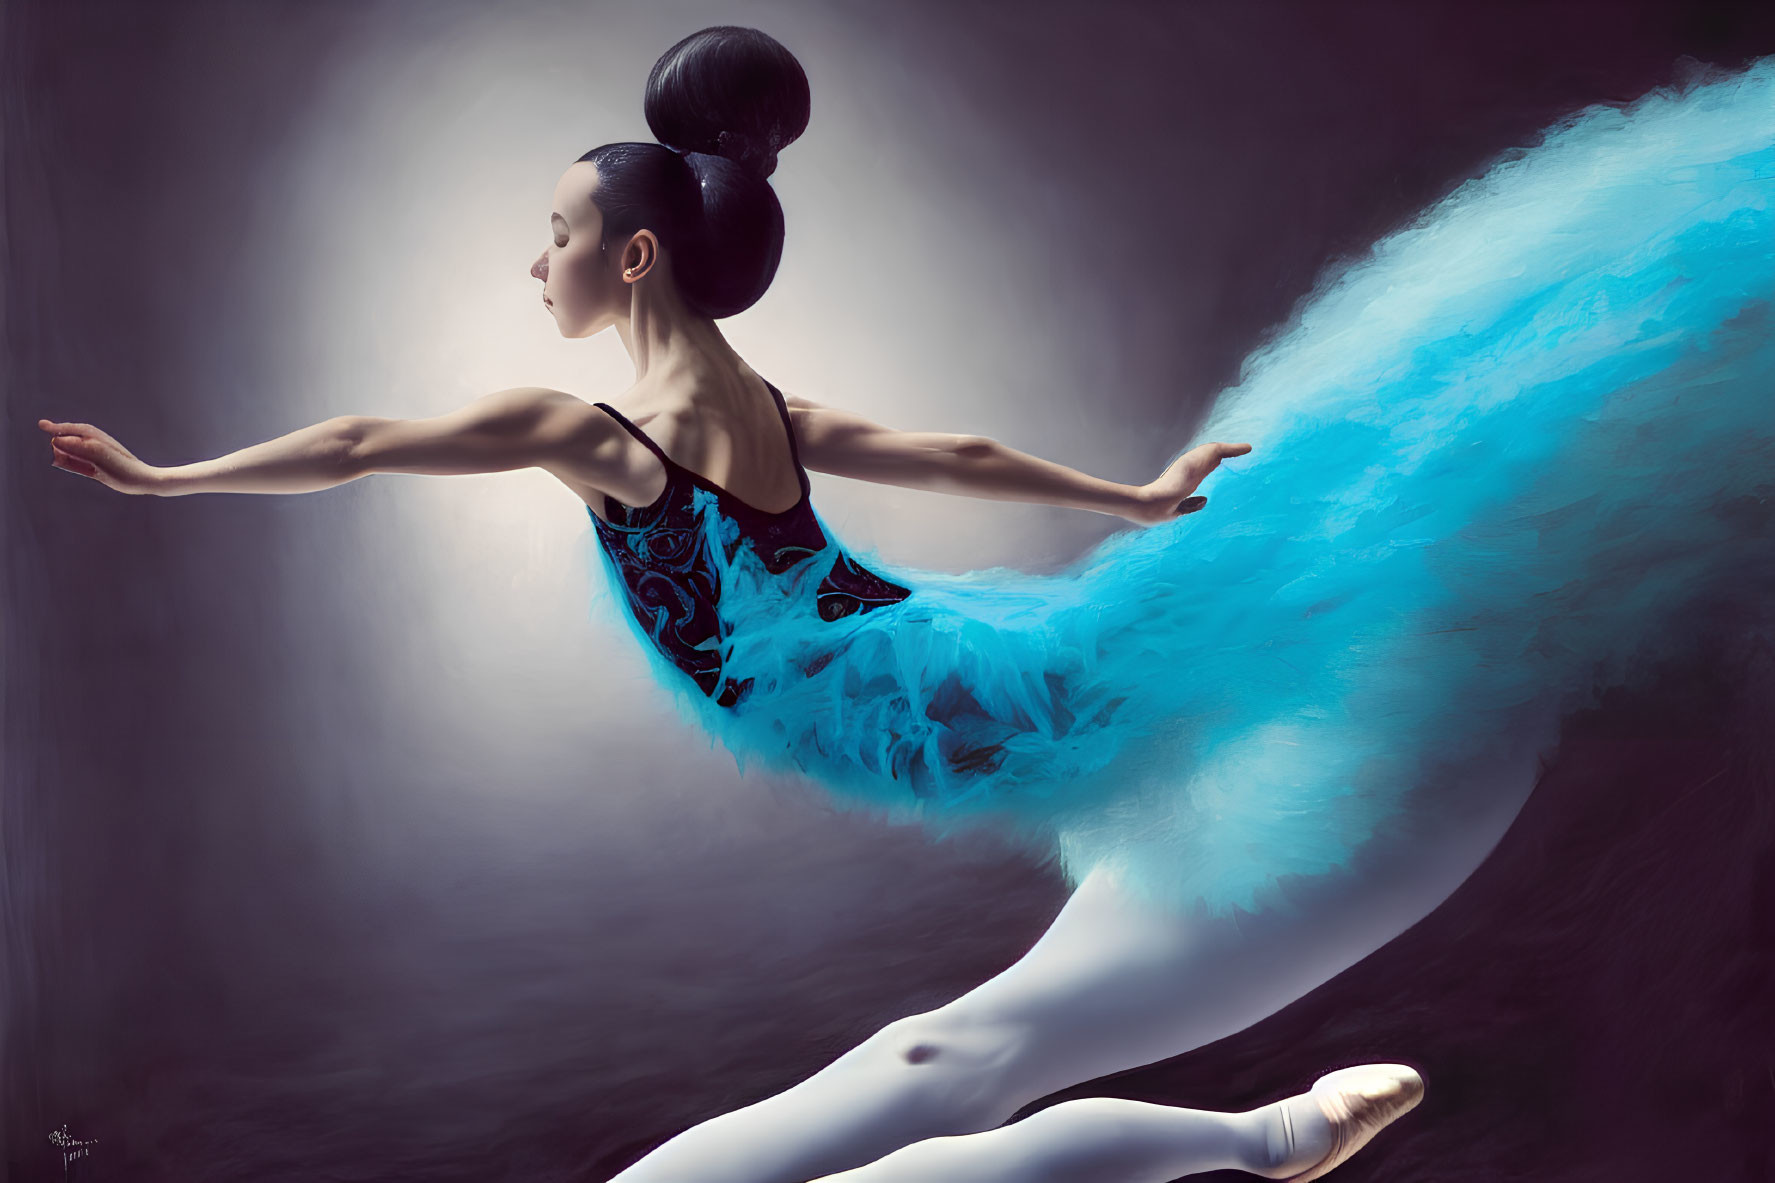 Graceful ballet dancer in blue tutu and white tights poses elegantly.